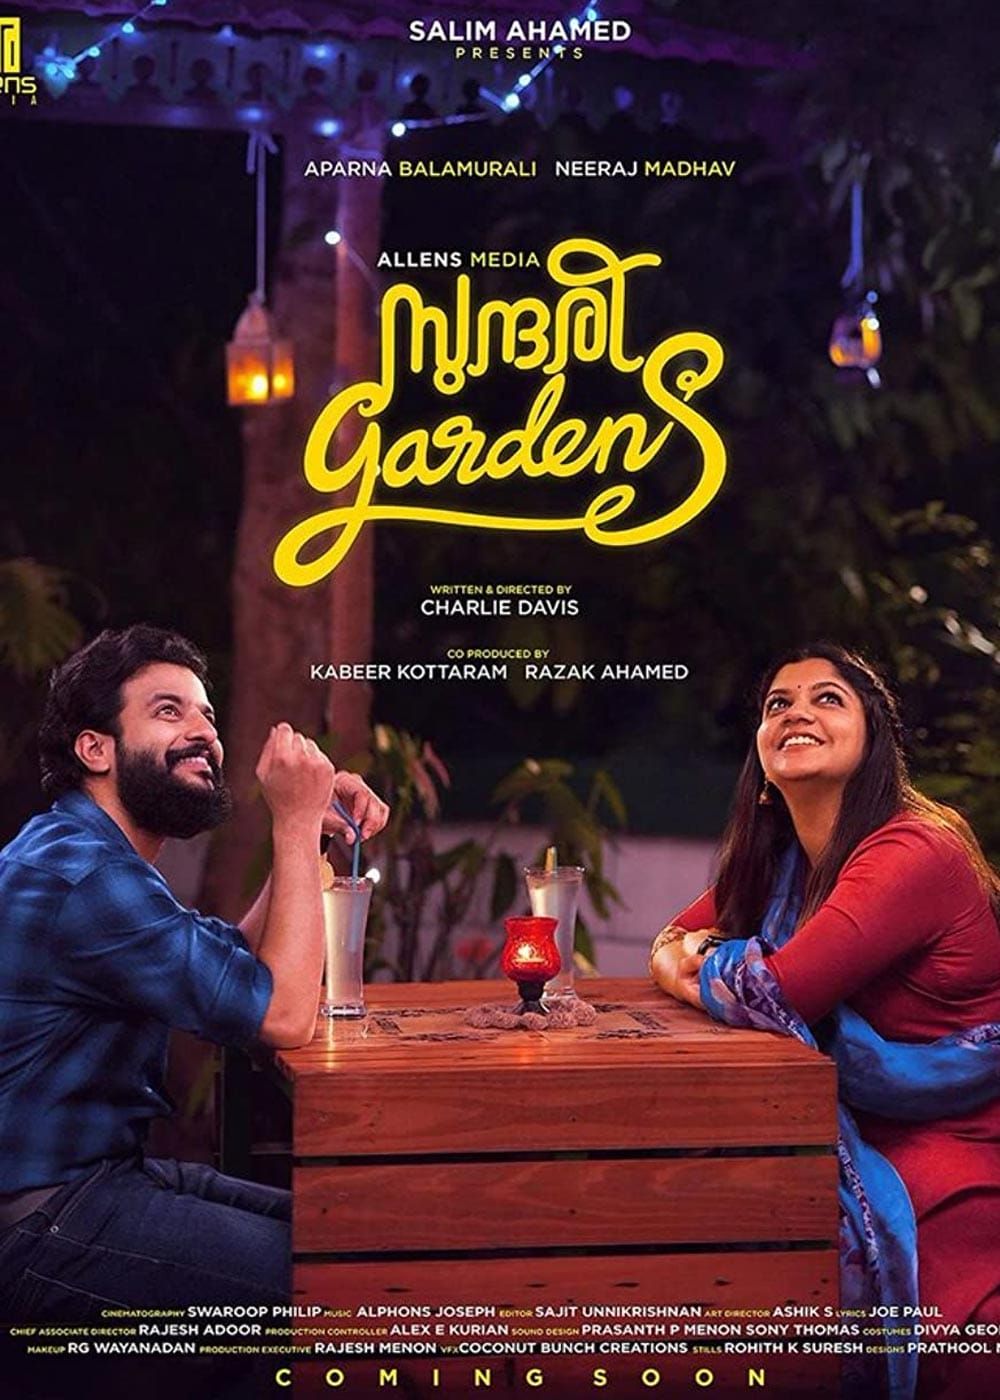 Sundari Gardens (2022) Hindi Dubbed HDRip download full movie